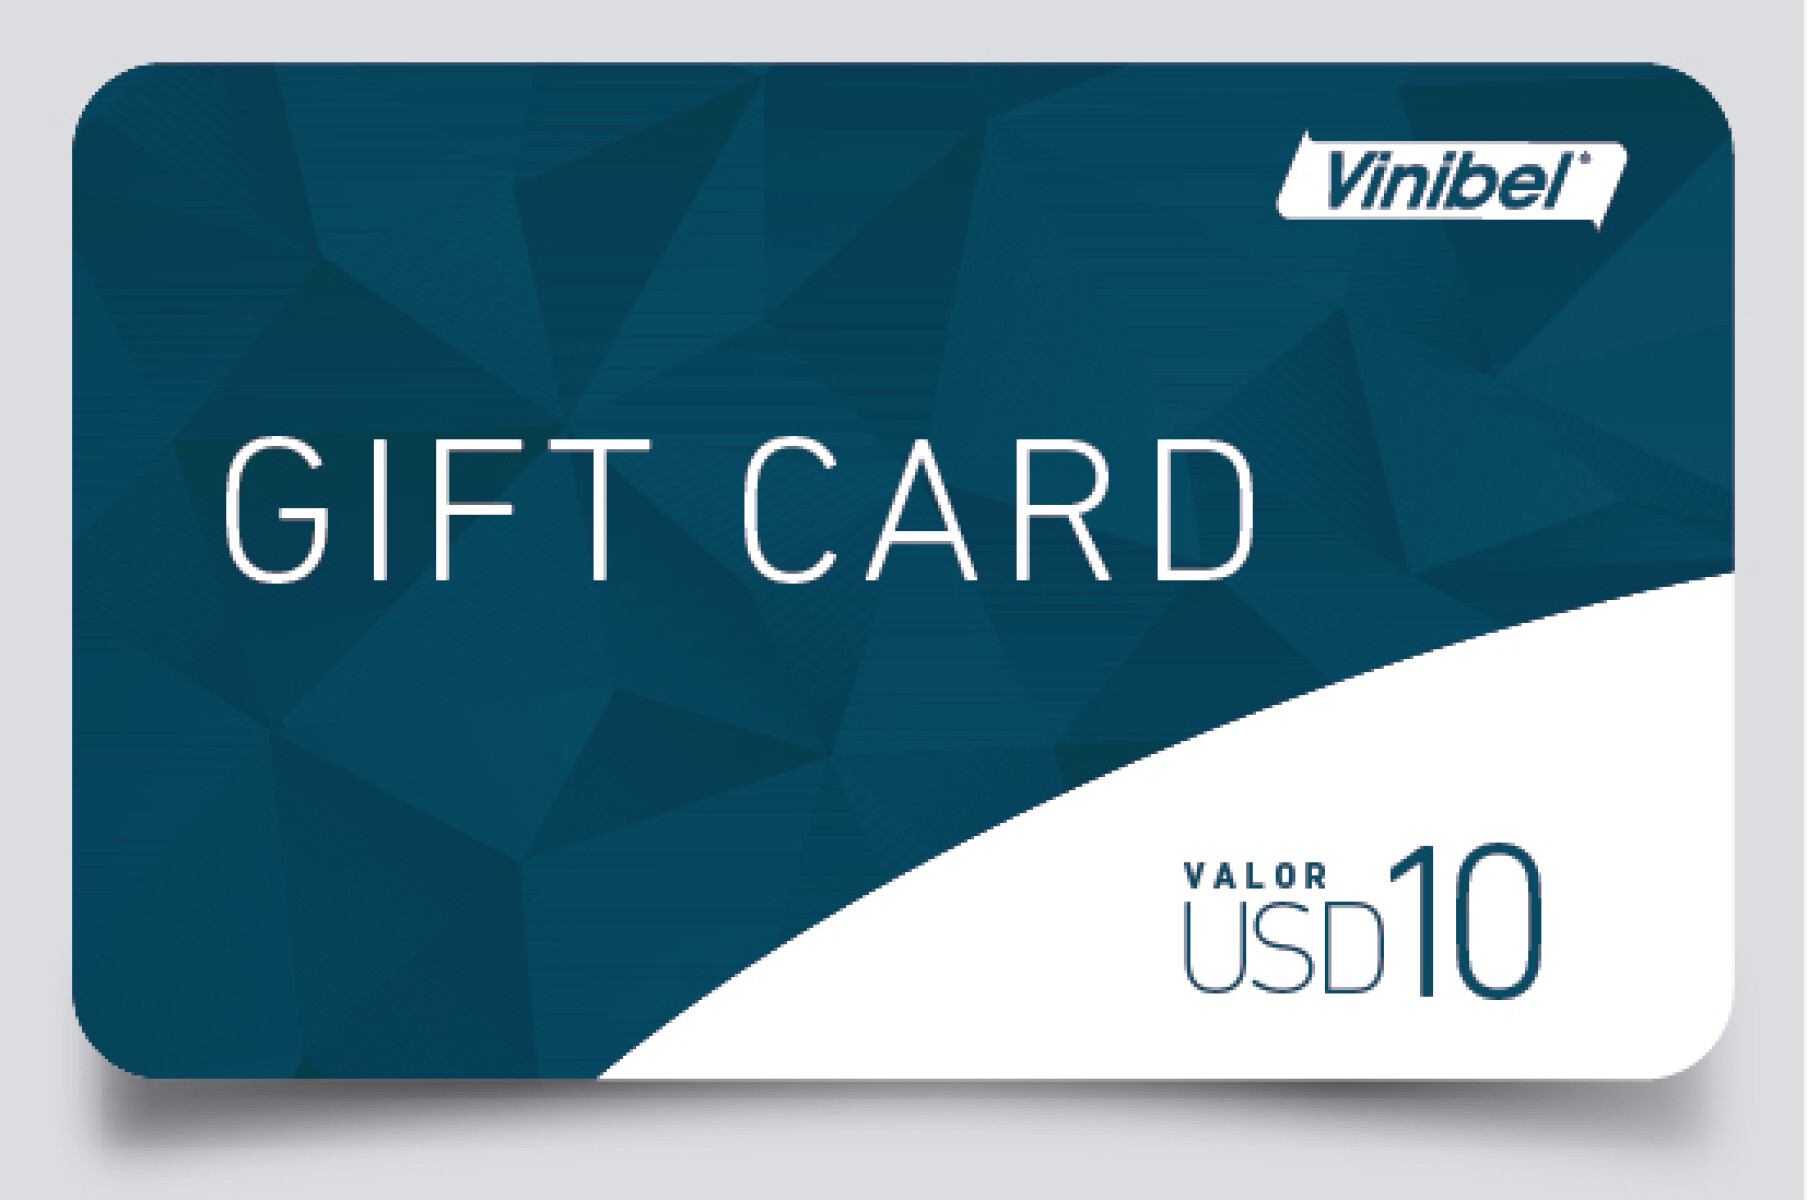 GIFT CARD VINIBEL - TARJETA GIFT CARD VINIBEL U$S 10 